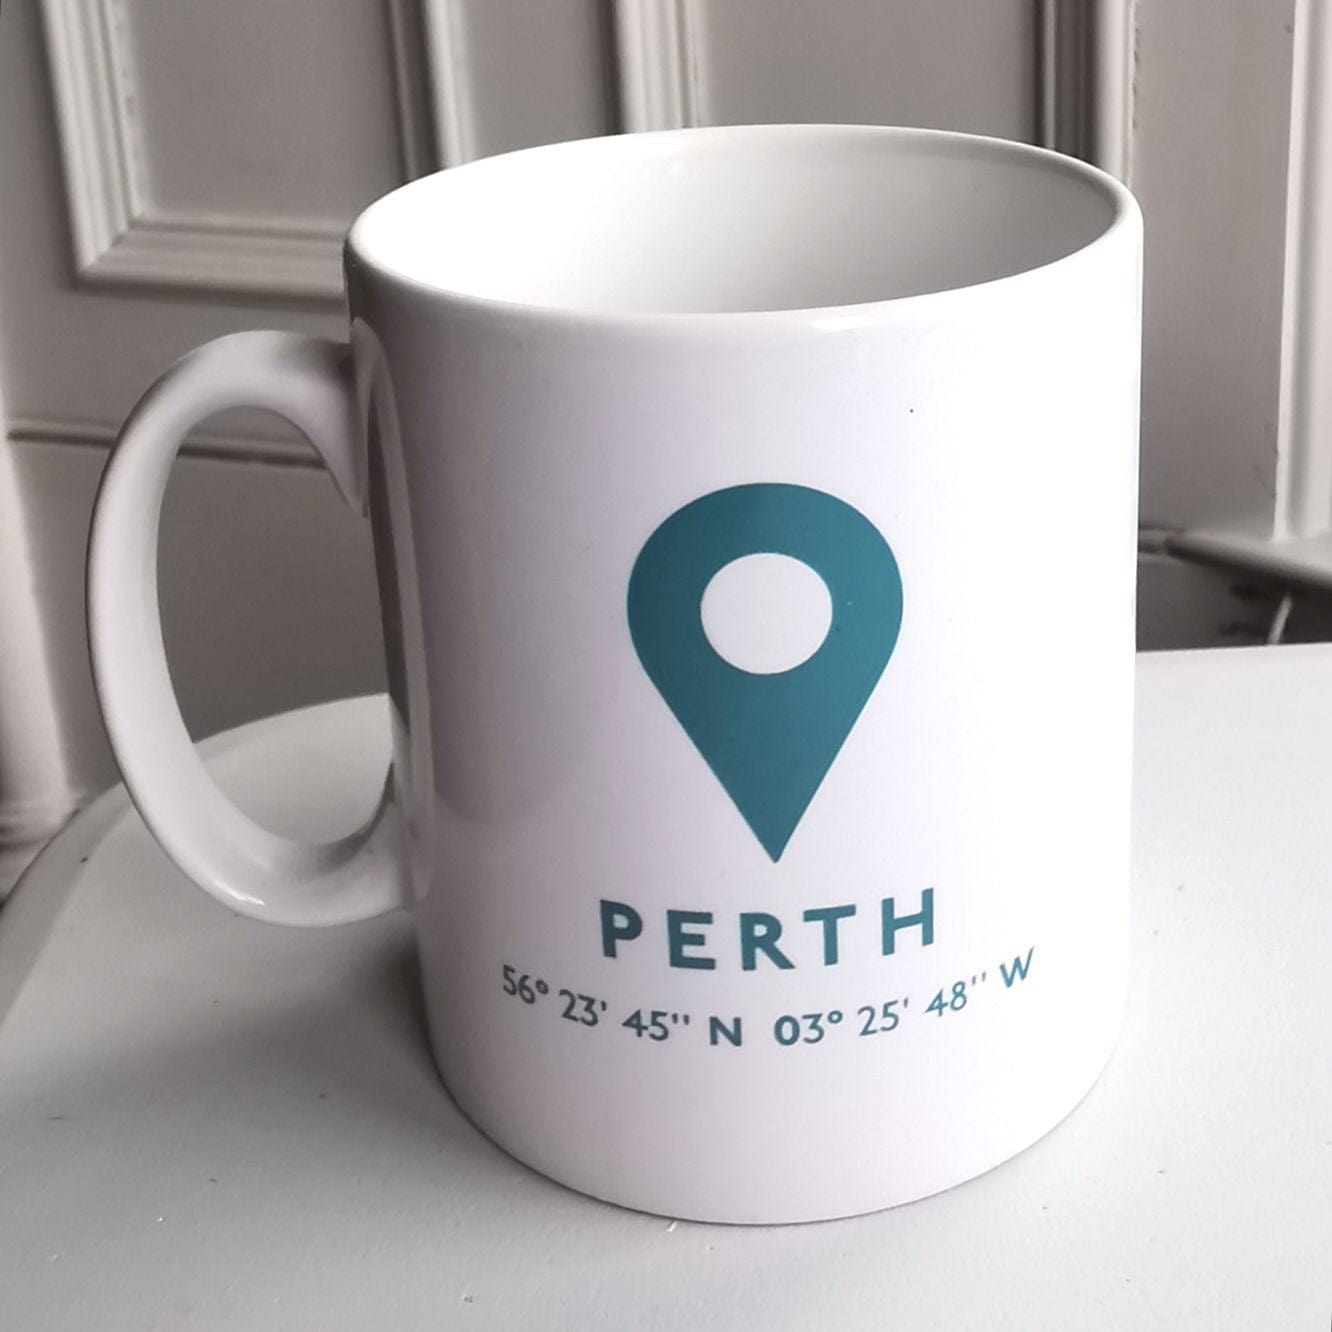 Default Perth Scotland Geographic Coordinates Mug